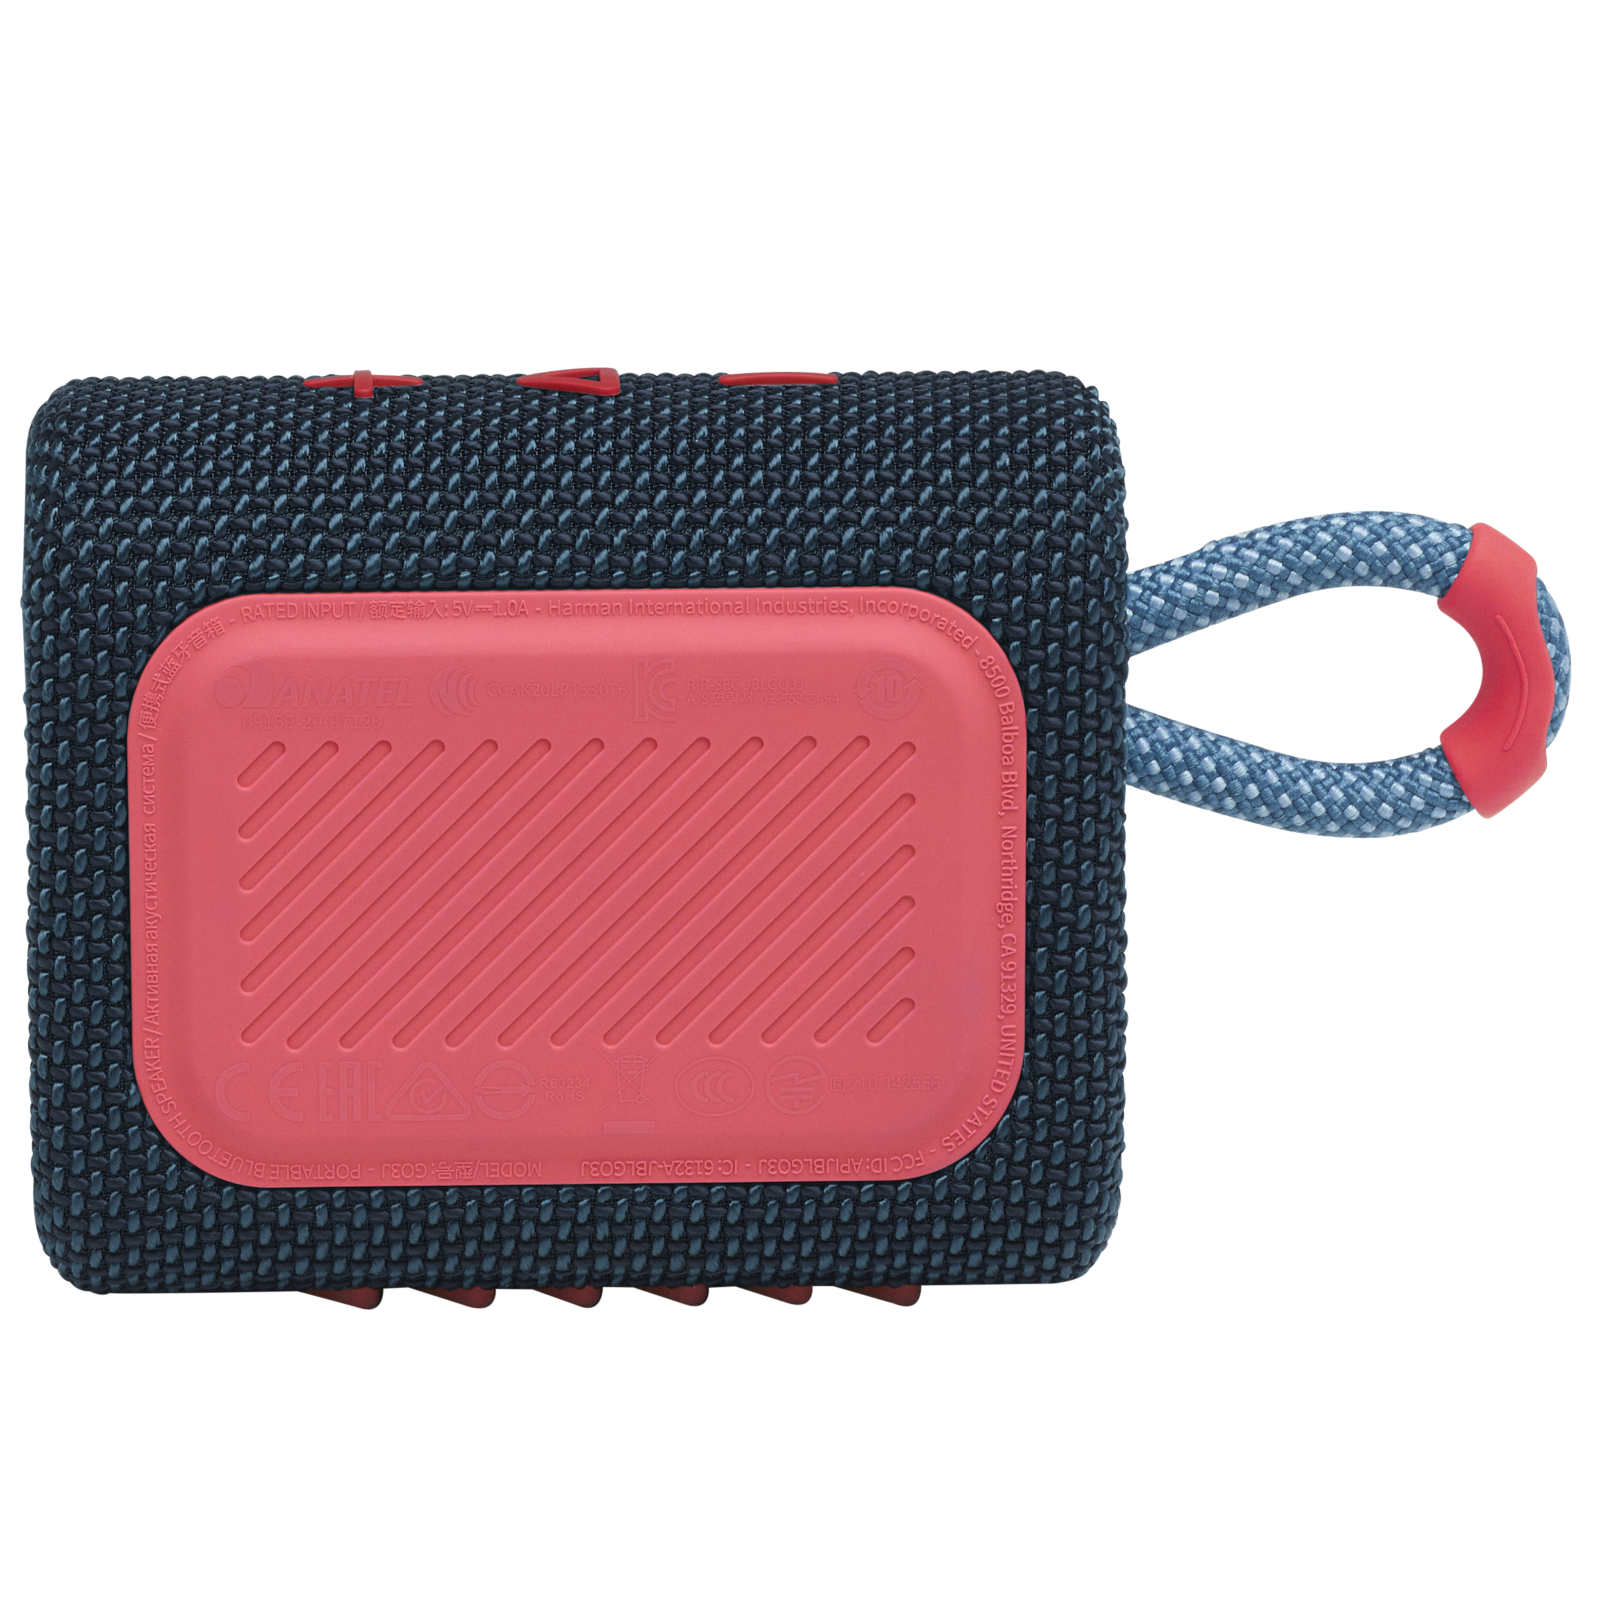 JBL Go 3 - Blue / Pink - Portable Waterproof Speaker - Back